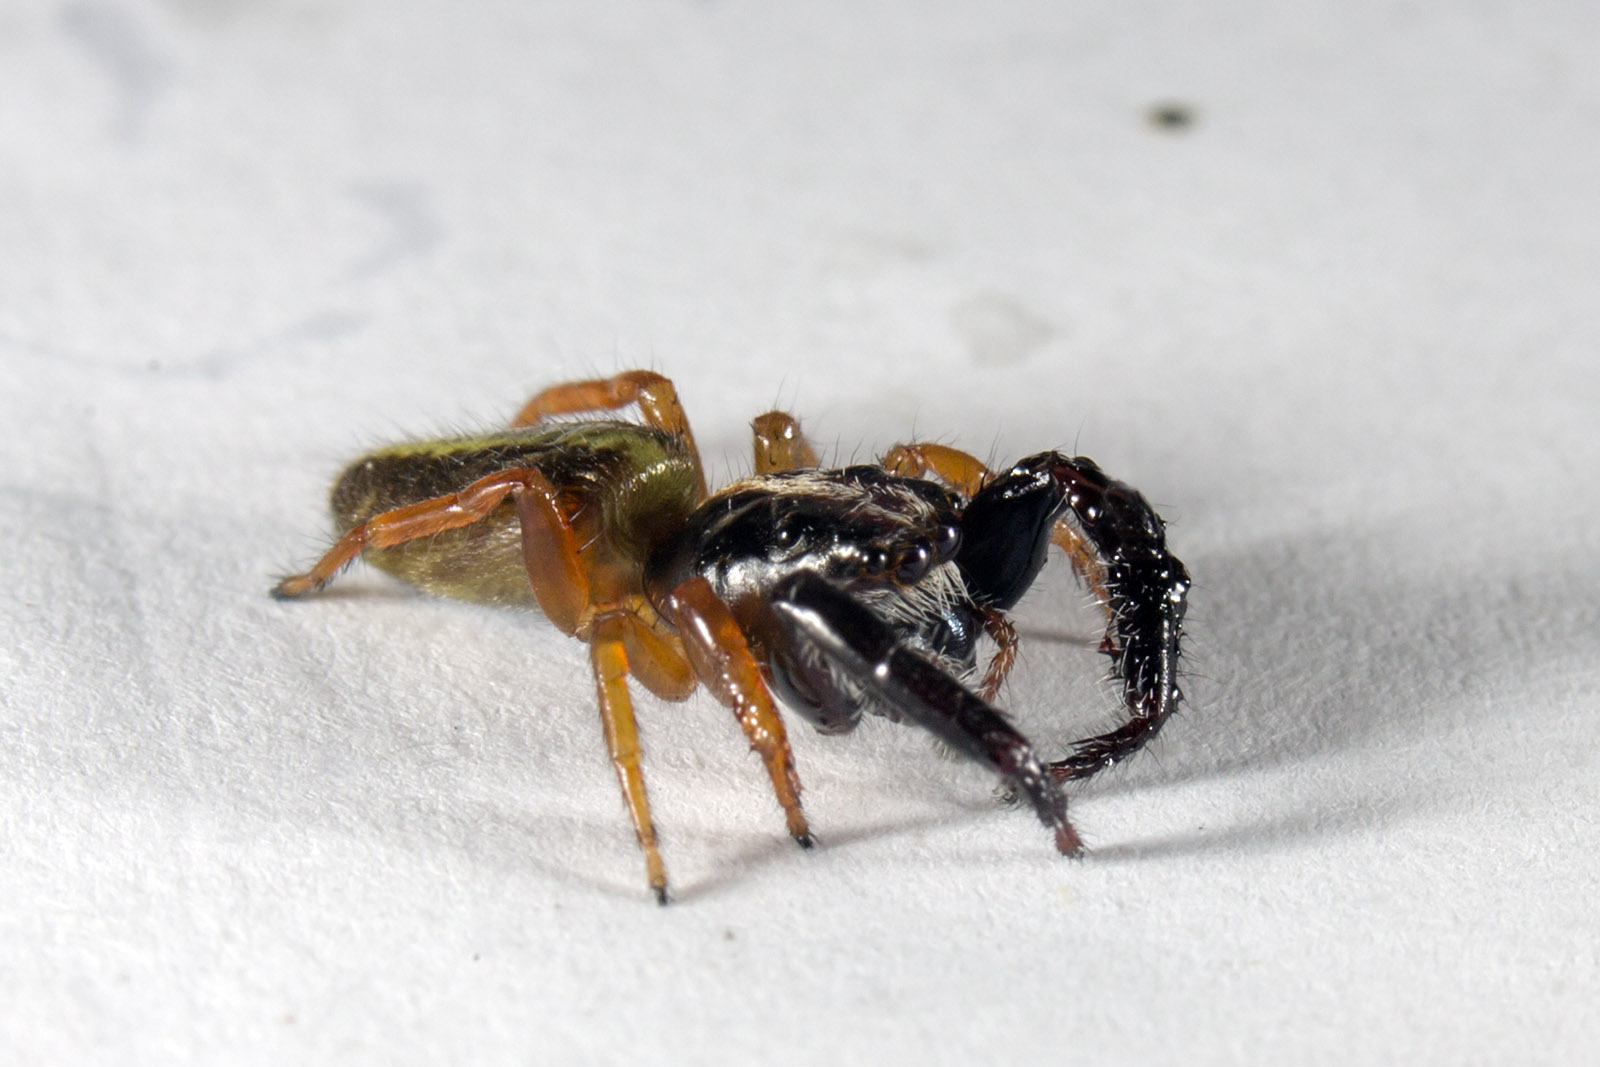 Trite planiceps - Black headed jumping spider